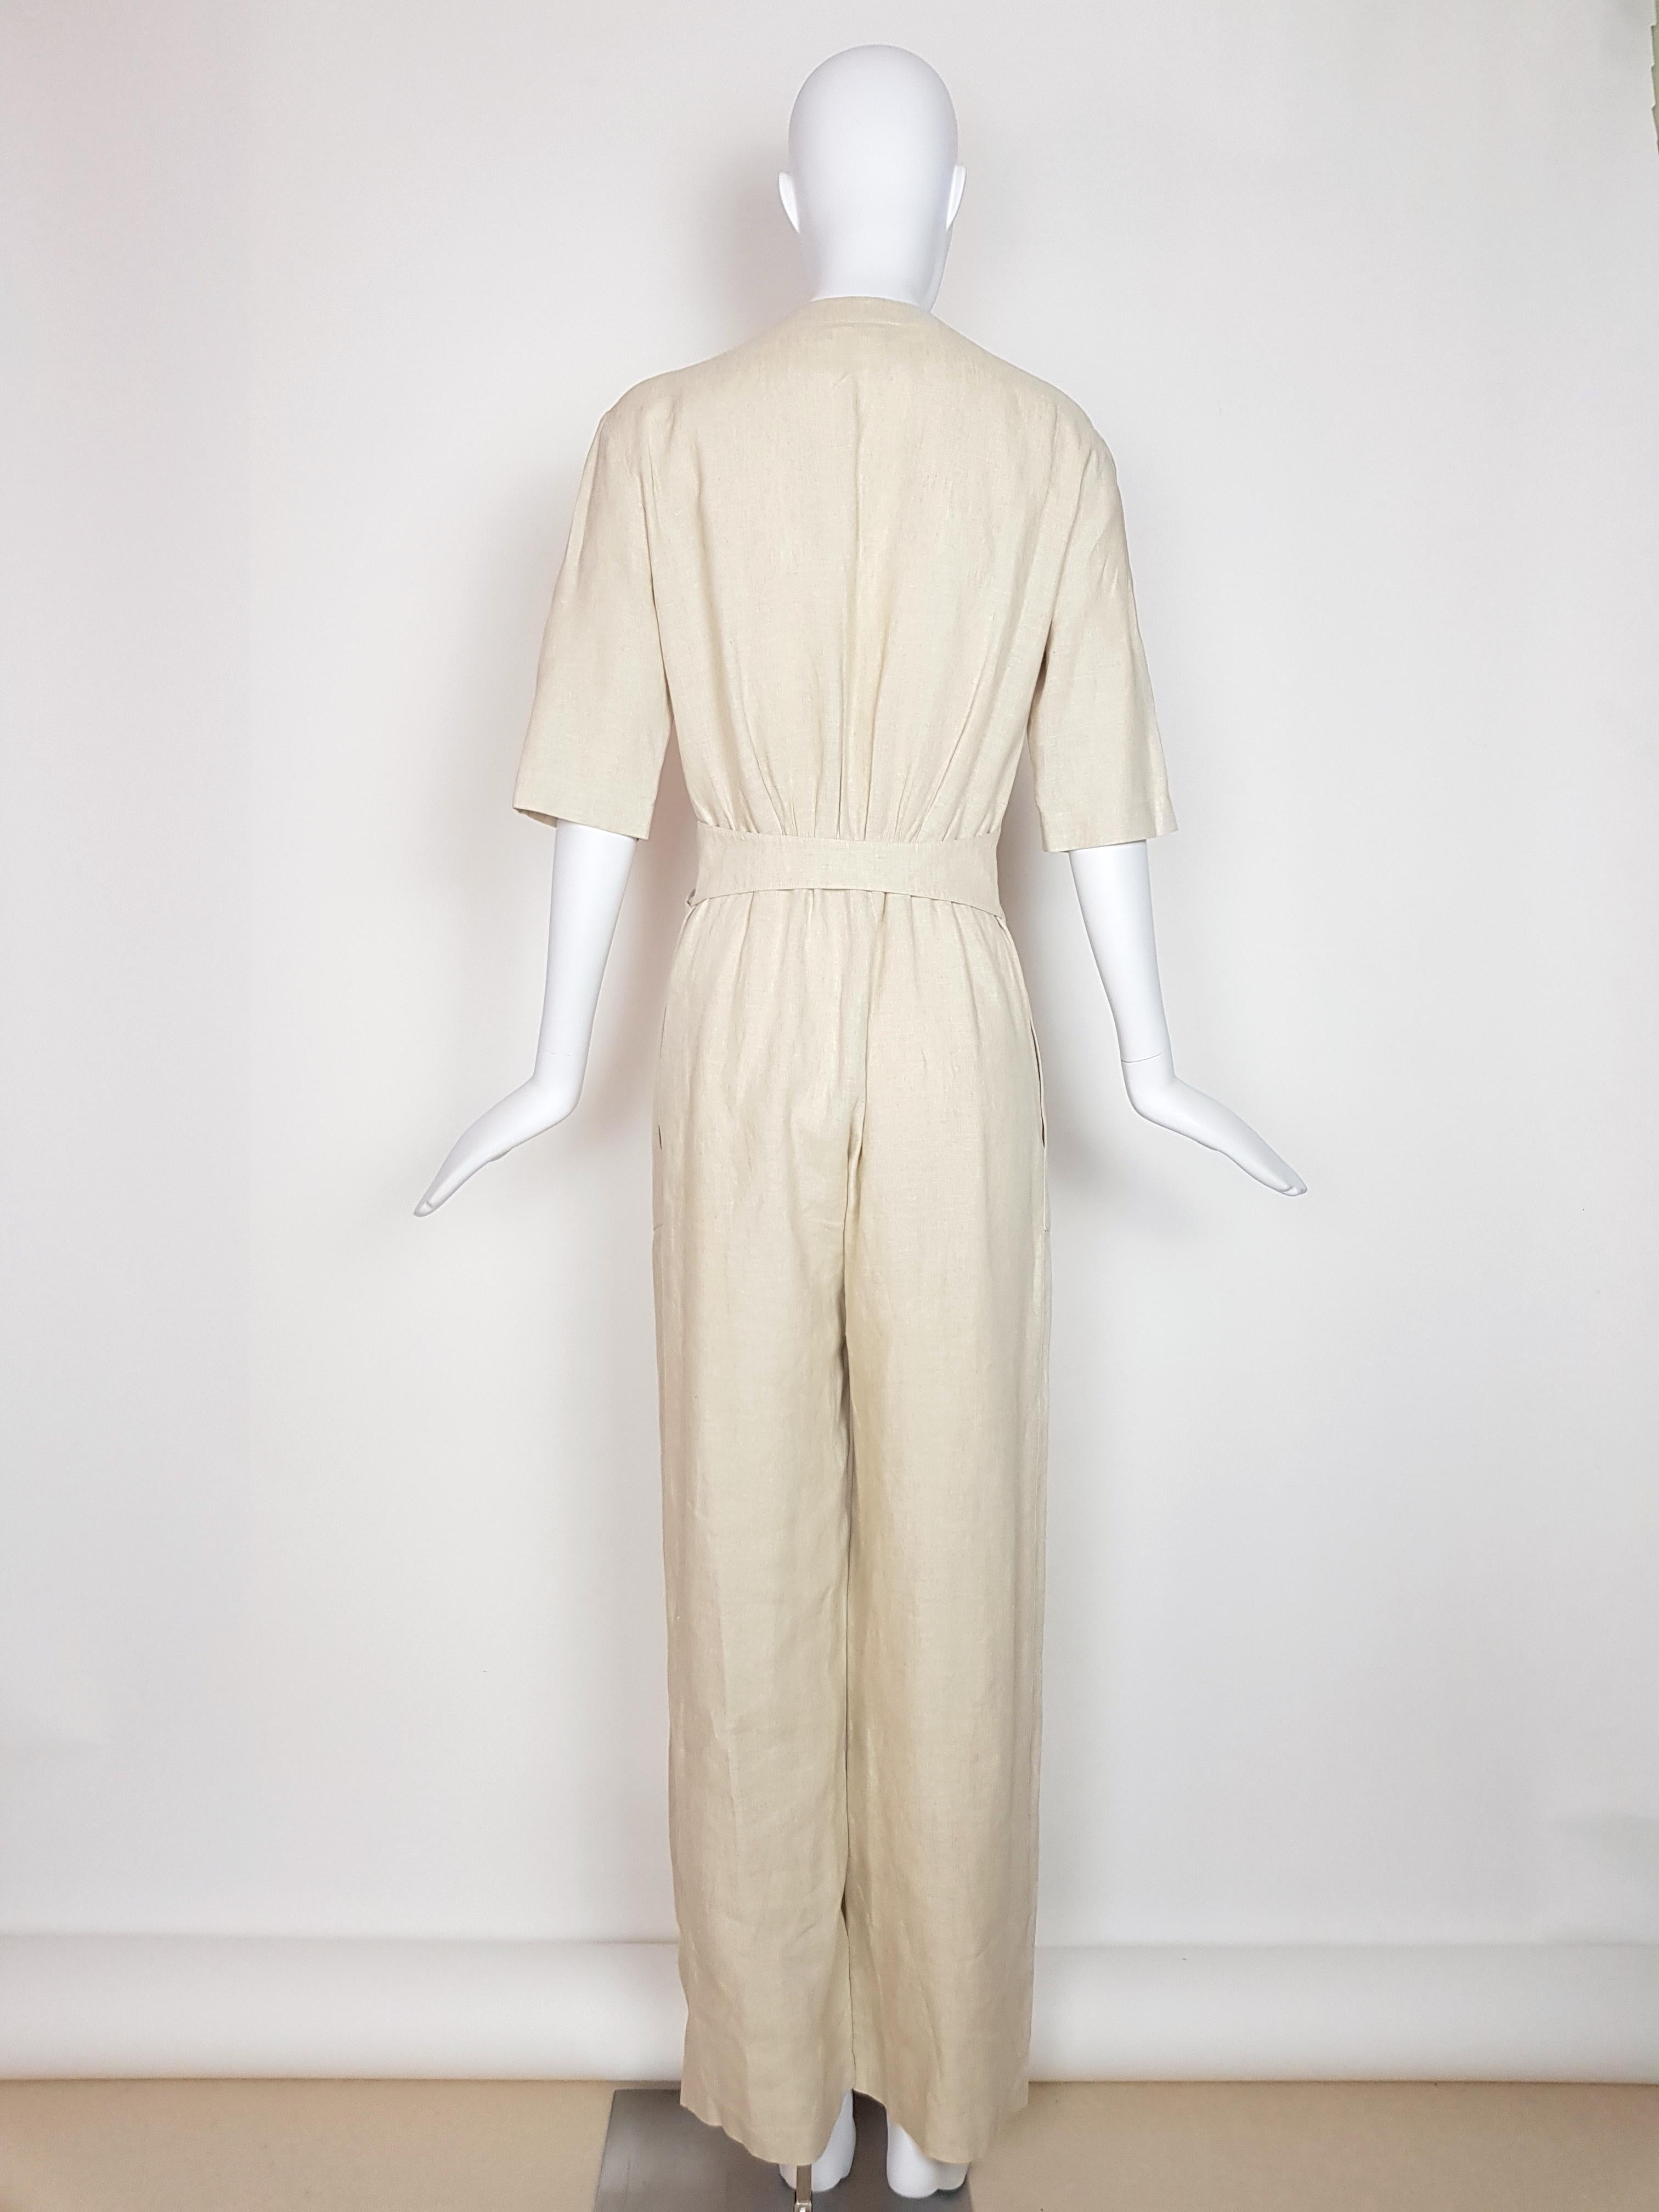 Women's THIERRY MUGLER beige linen Jumpsuit, c. 1990